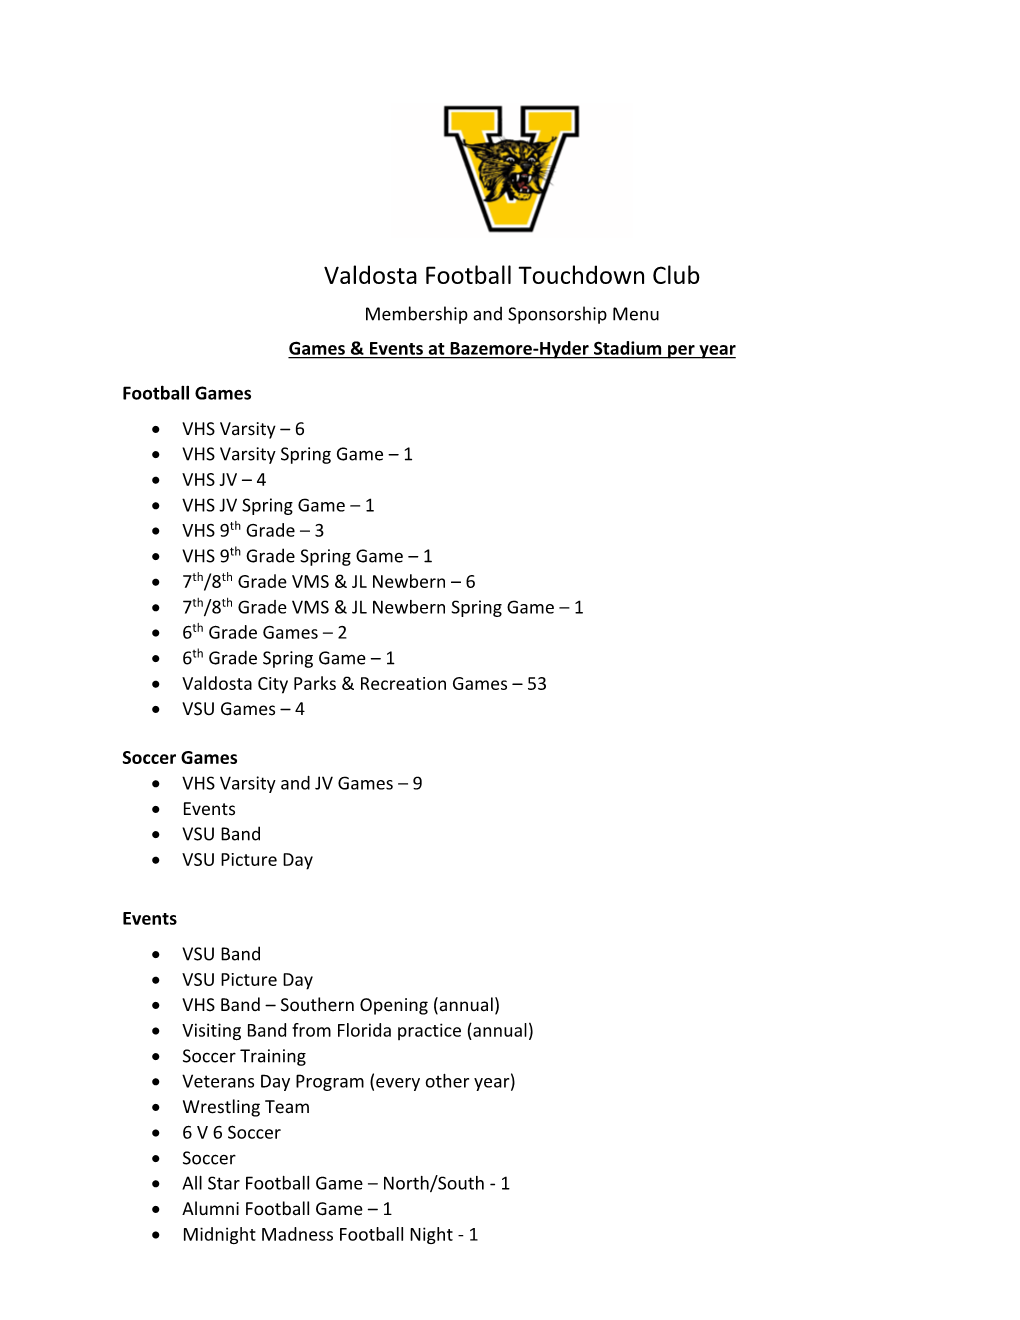 Valdosta Football Touchdown Club Membership and Sponsorship Menu Games & Events at Bazemore-Hyder Stadium Per Year